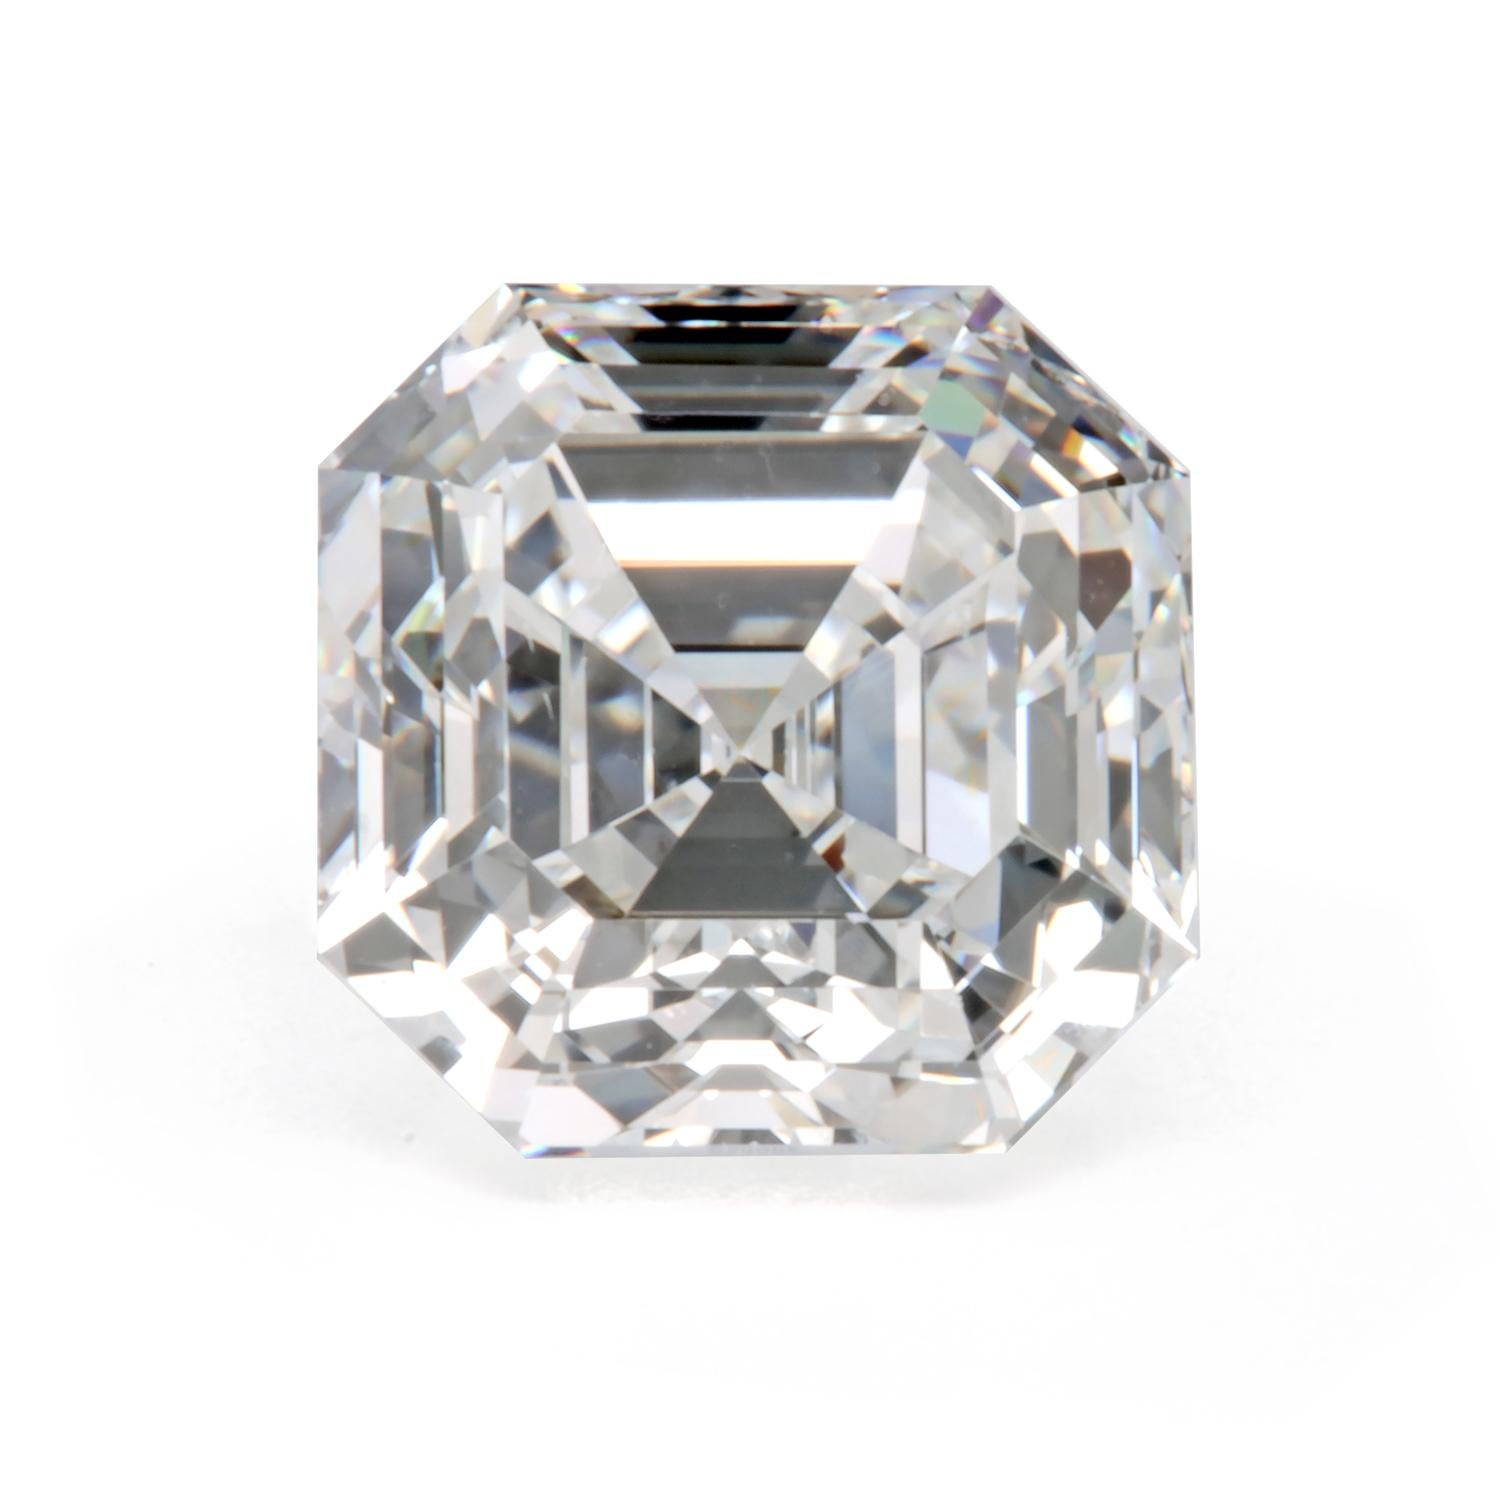 Asscher Cut Leon Mege platinum ring solitaire with certified 1.83 ct Asscher cut diamond  For Sale